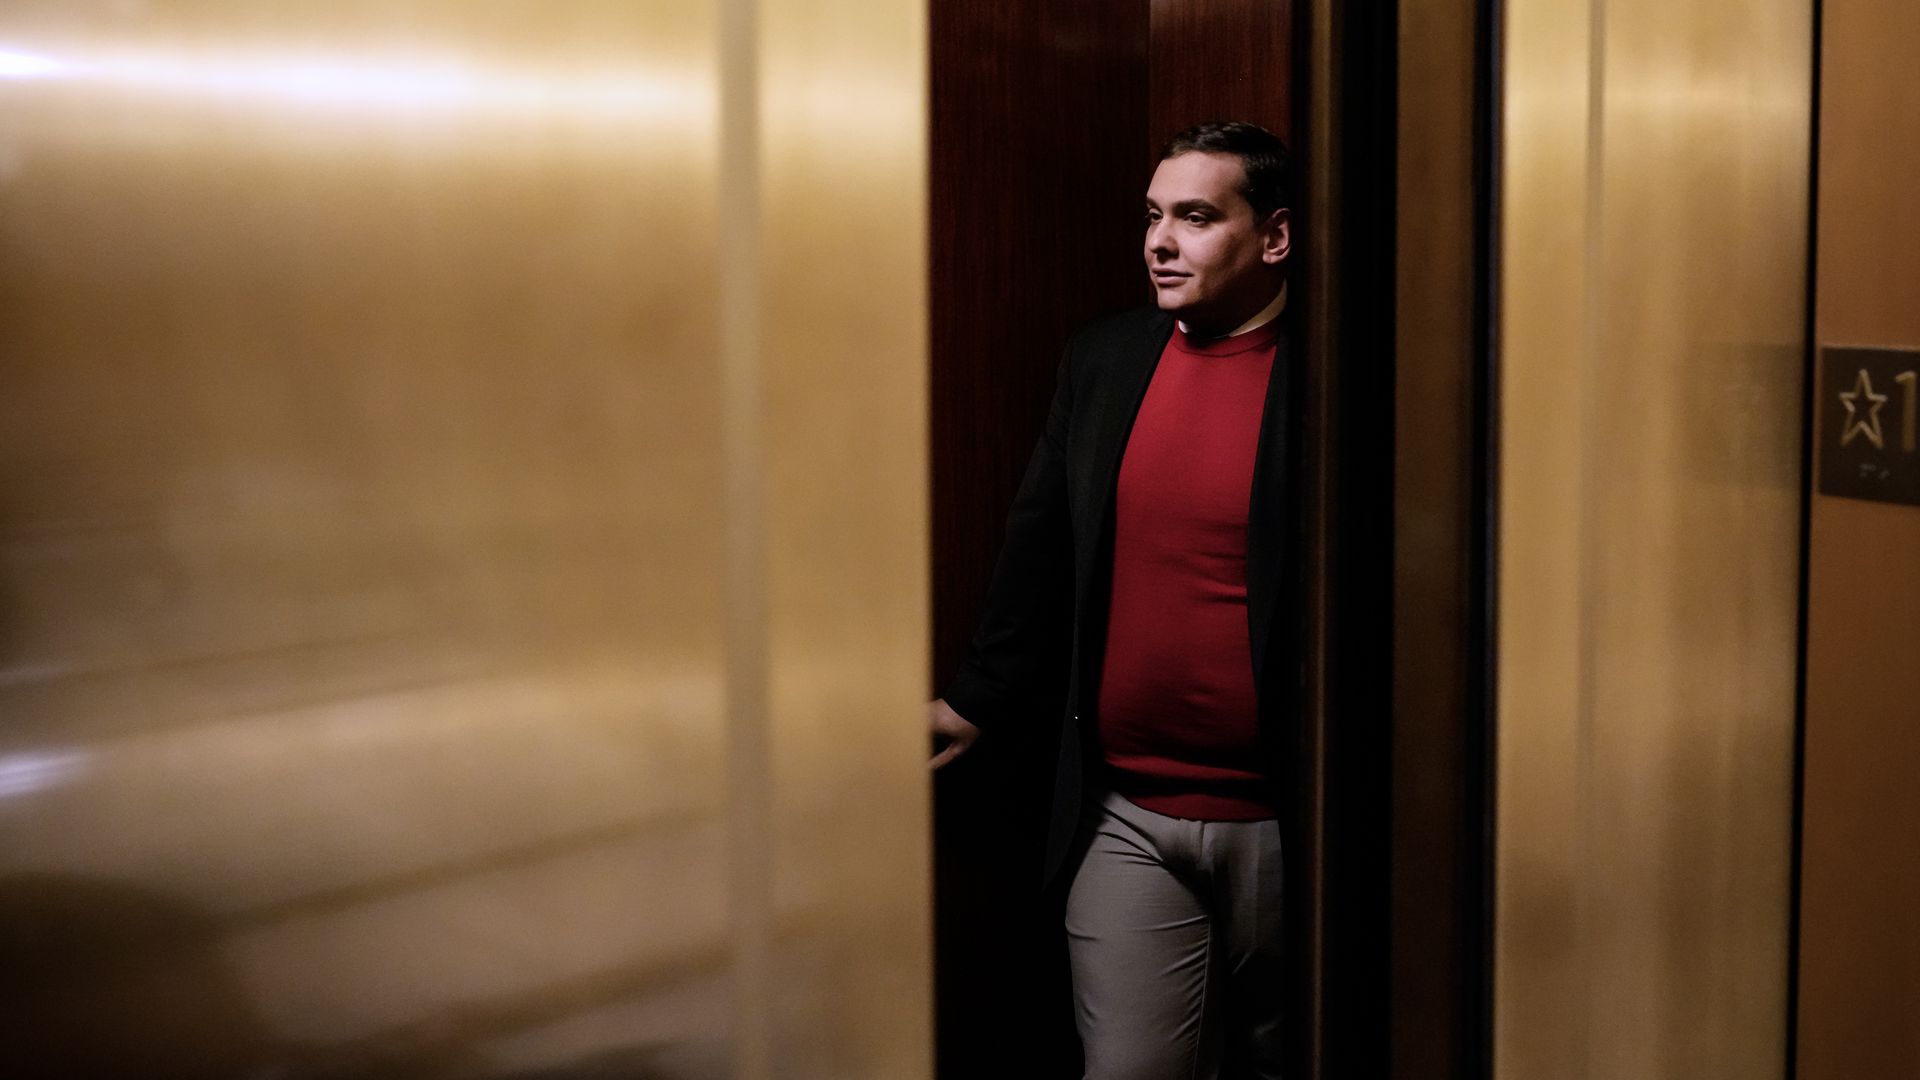 Santos, wearing a red sweater, behind closing elevator doors.